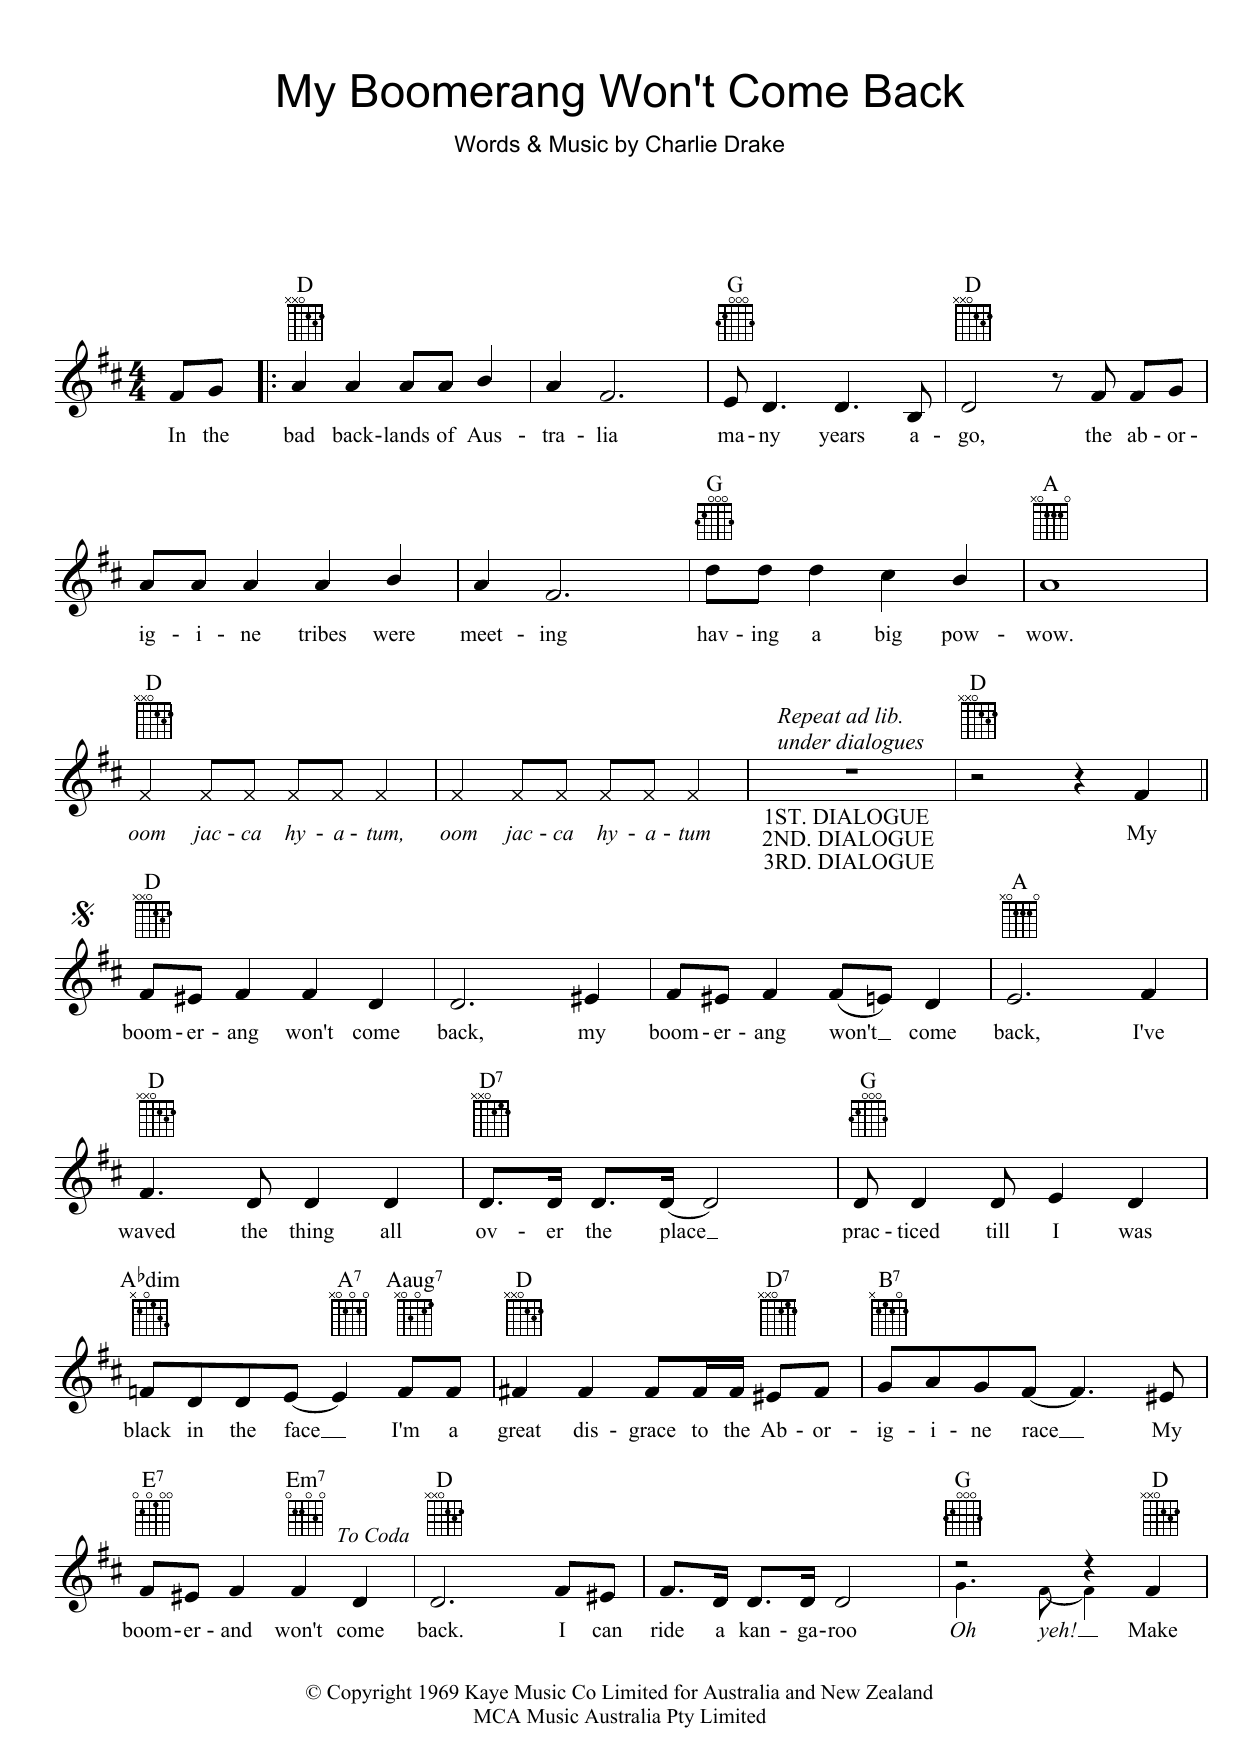 Charlie Drake My Boomerang Won't Come Back Sheet Music Notes & Chords for Melody Line, Lyrics & Chords - Download or Print PDF